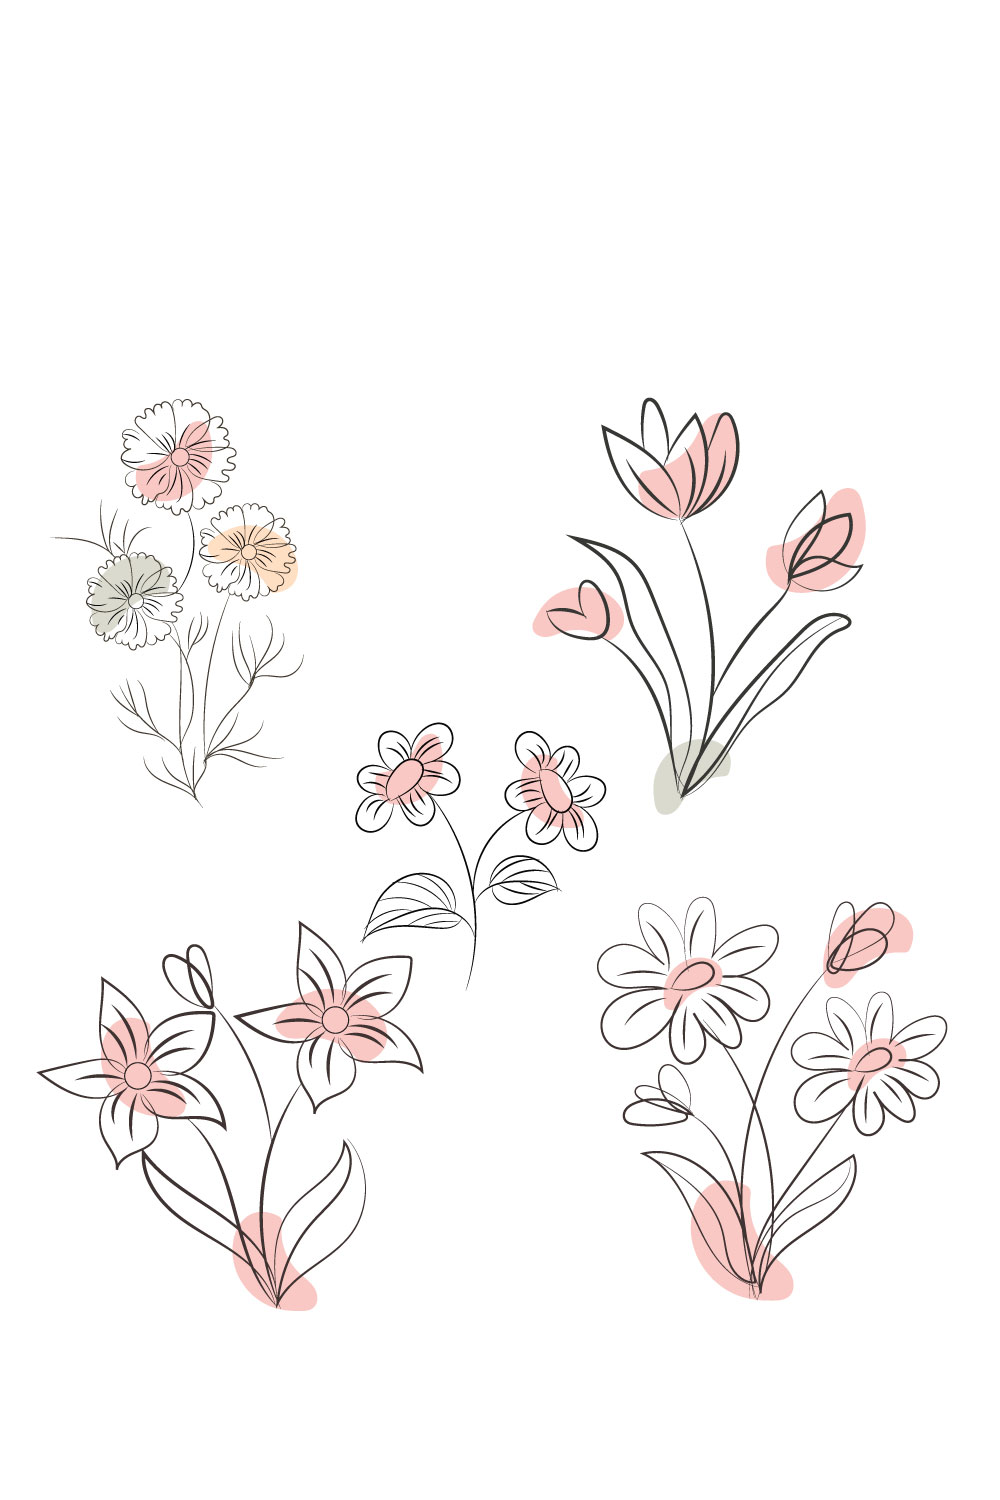 32 Best Small flower drawings ideas | small tattoos, small flower drawings,  tattoos